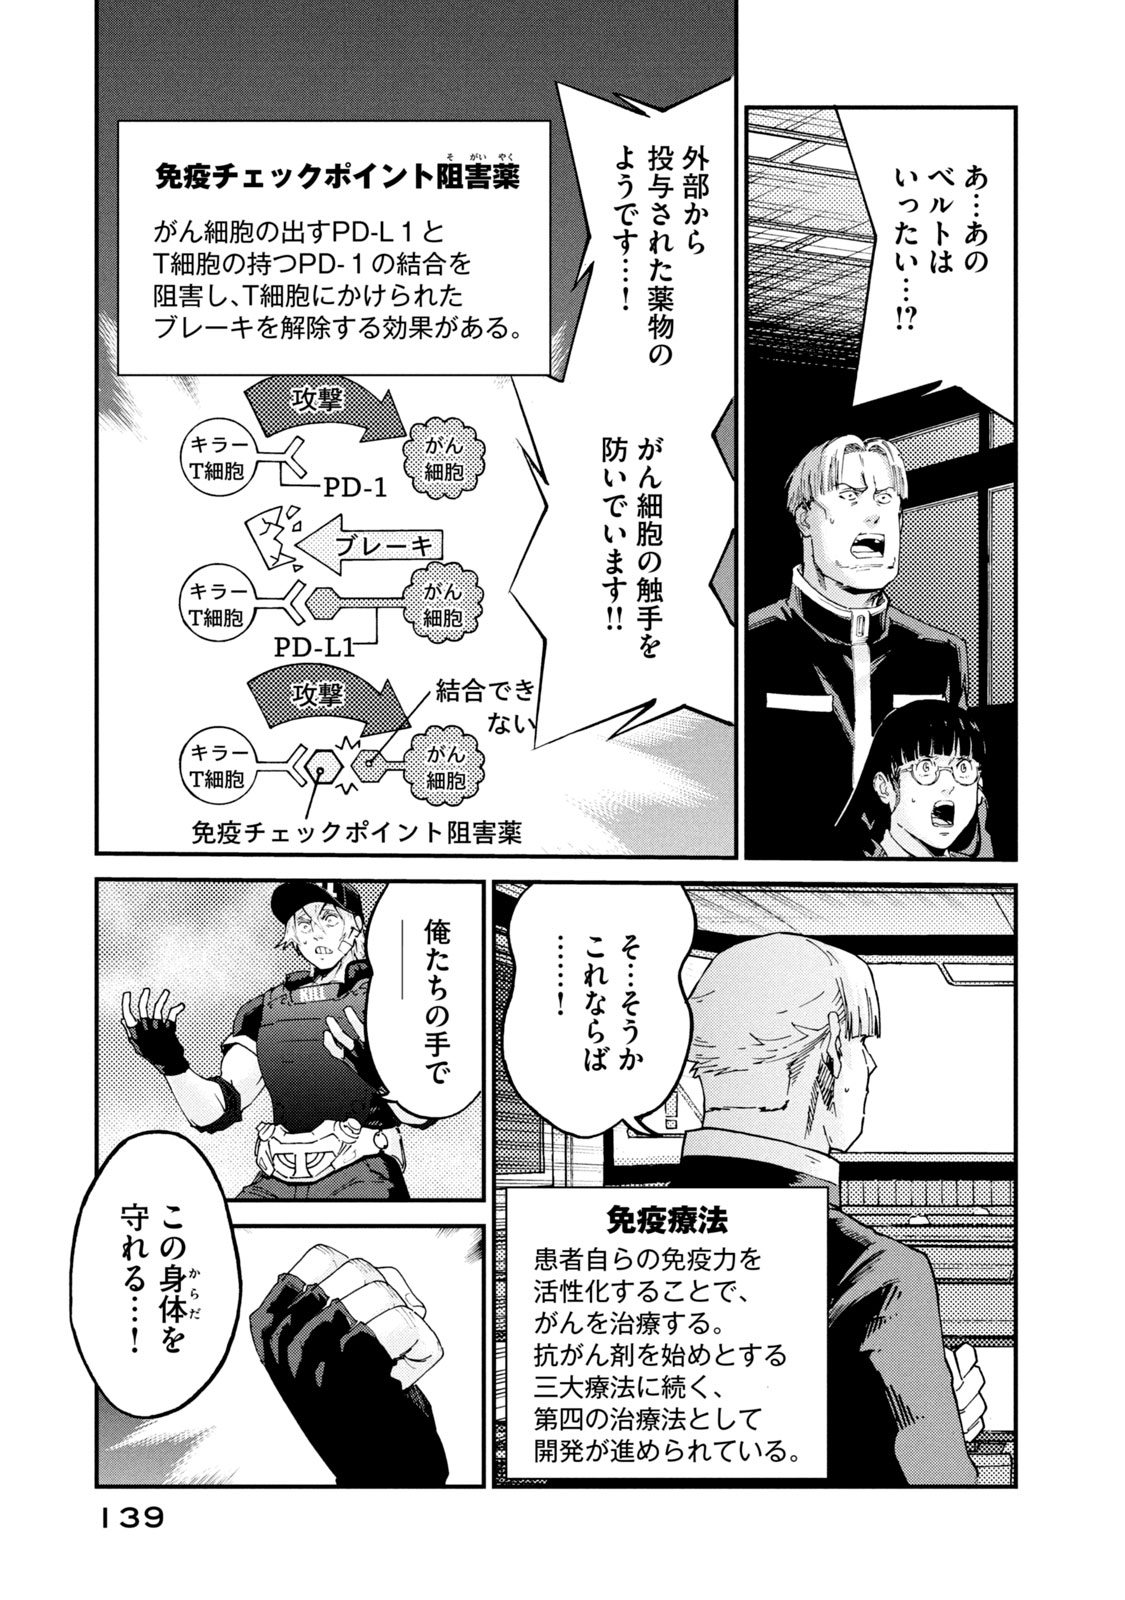 Hataraku Saibou BLACK - Chapter 41 - Page 17